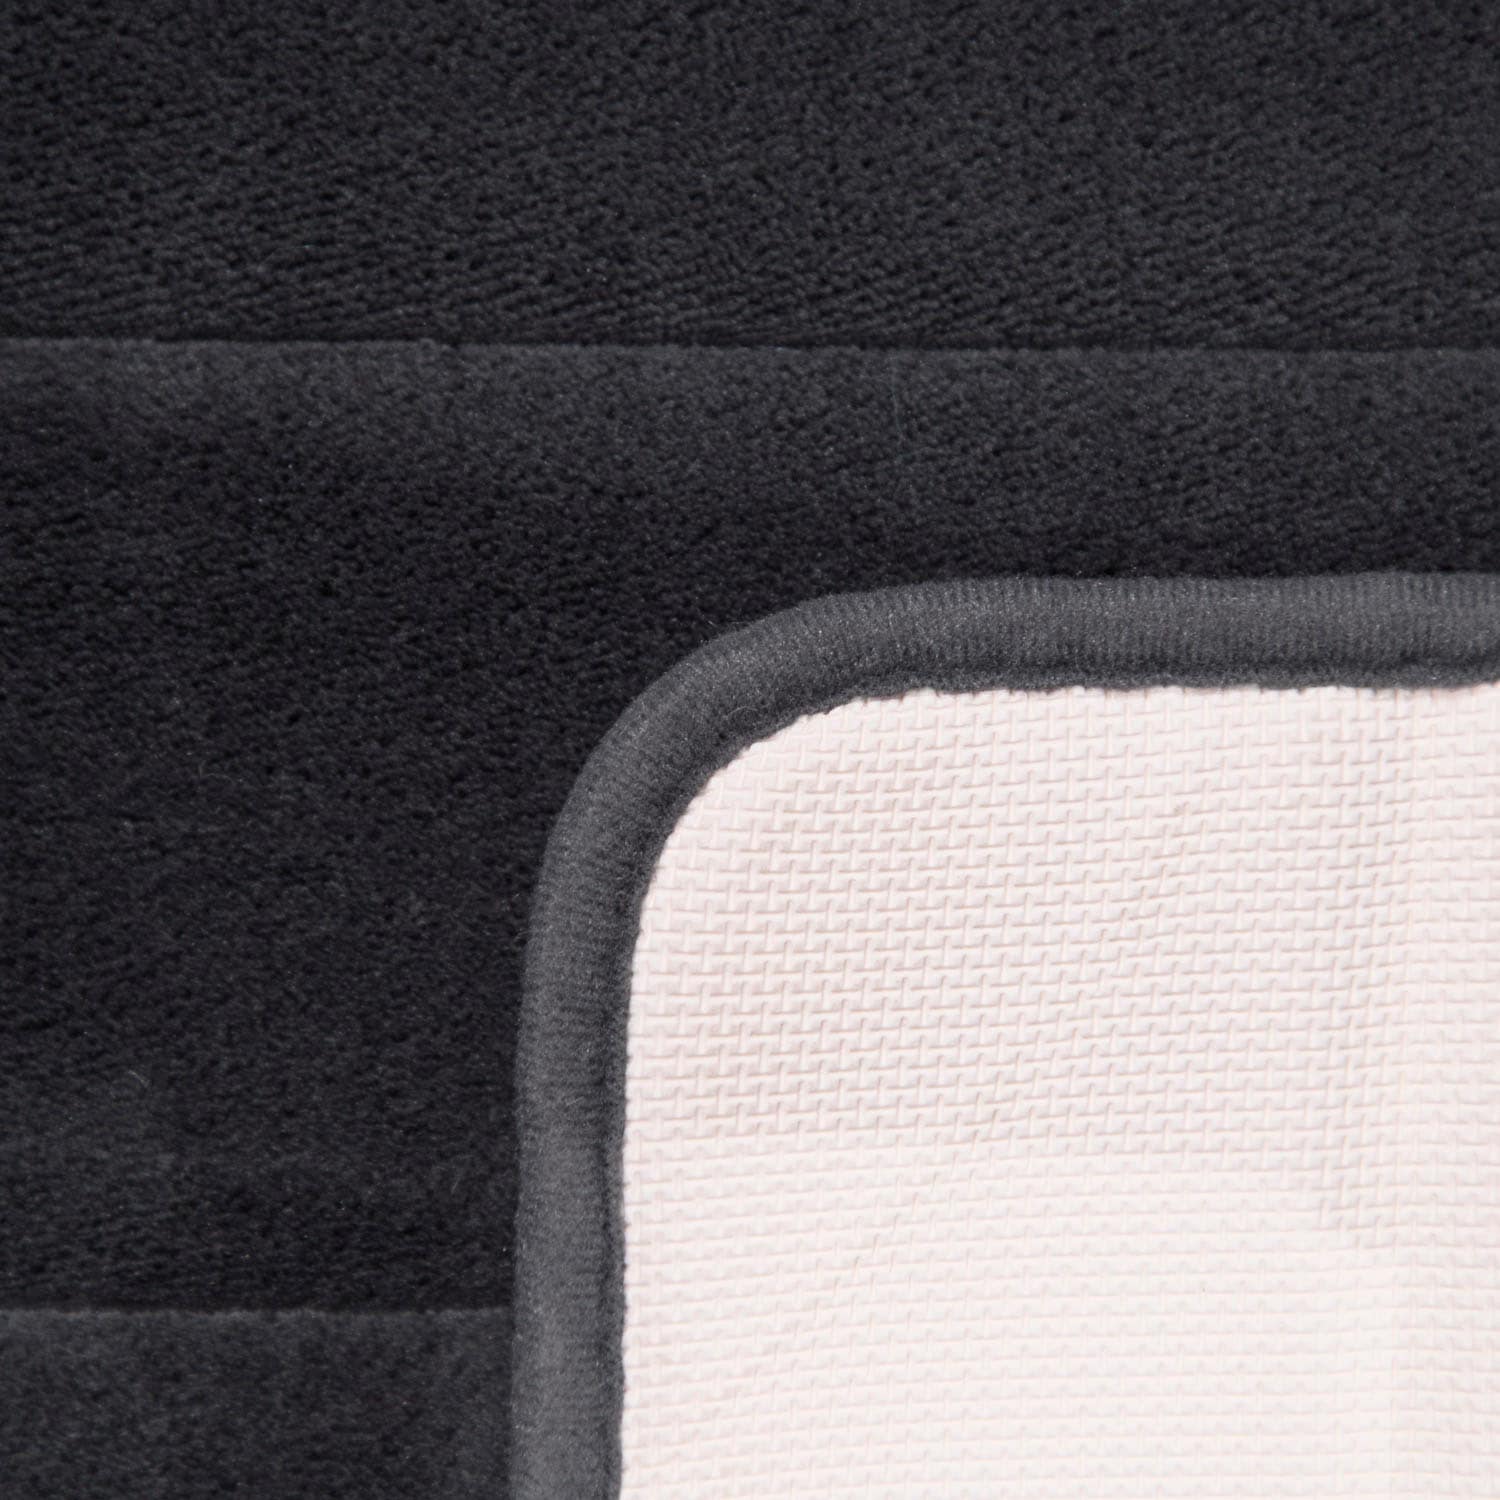 Paco Home Badematte »Corby 252«, Höhe 13 mm, rutschhemmend beschichtet, fußbodenheizungsgeeignet, Badteppich, gestreift, Hoch-Tief Effekt, Memory-Foam Effekt